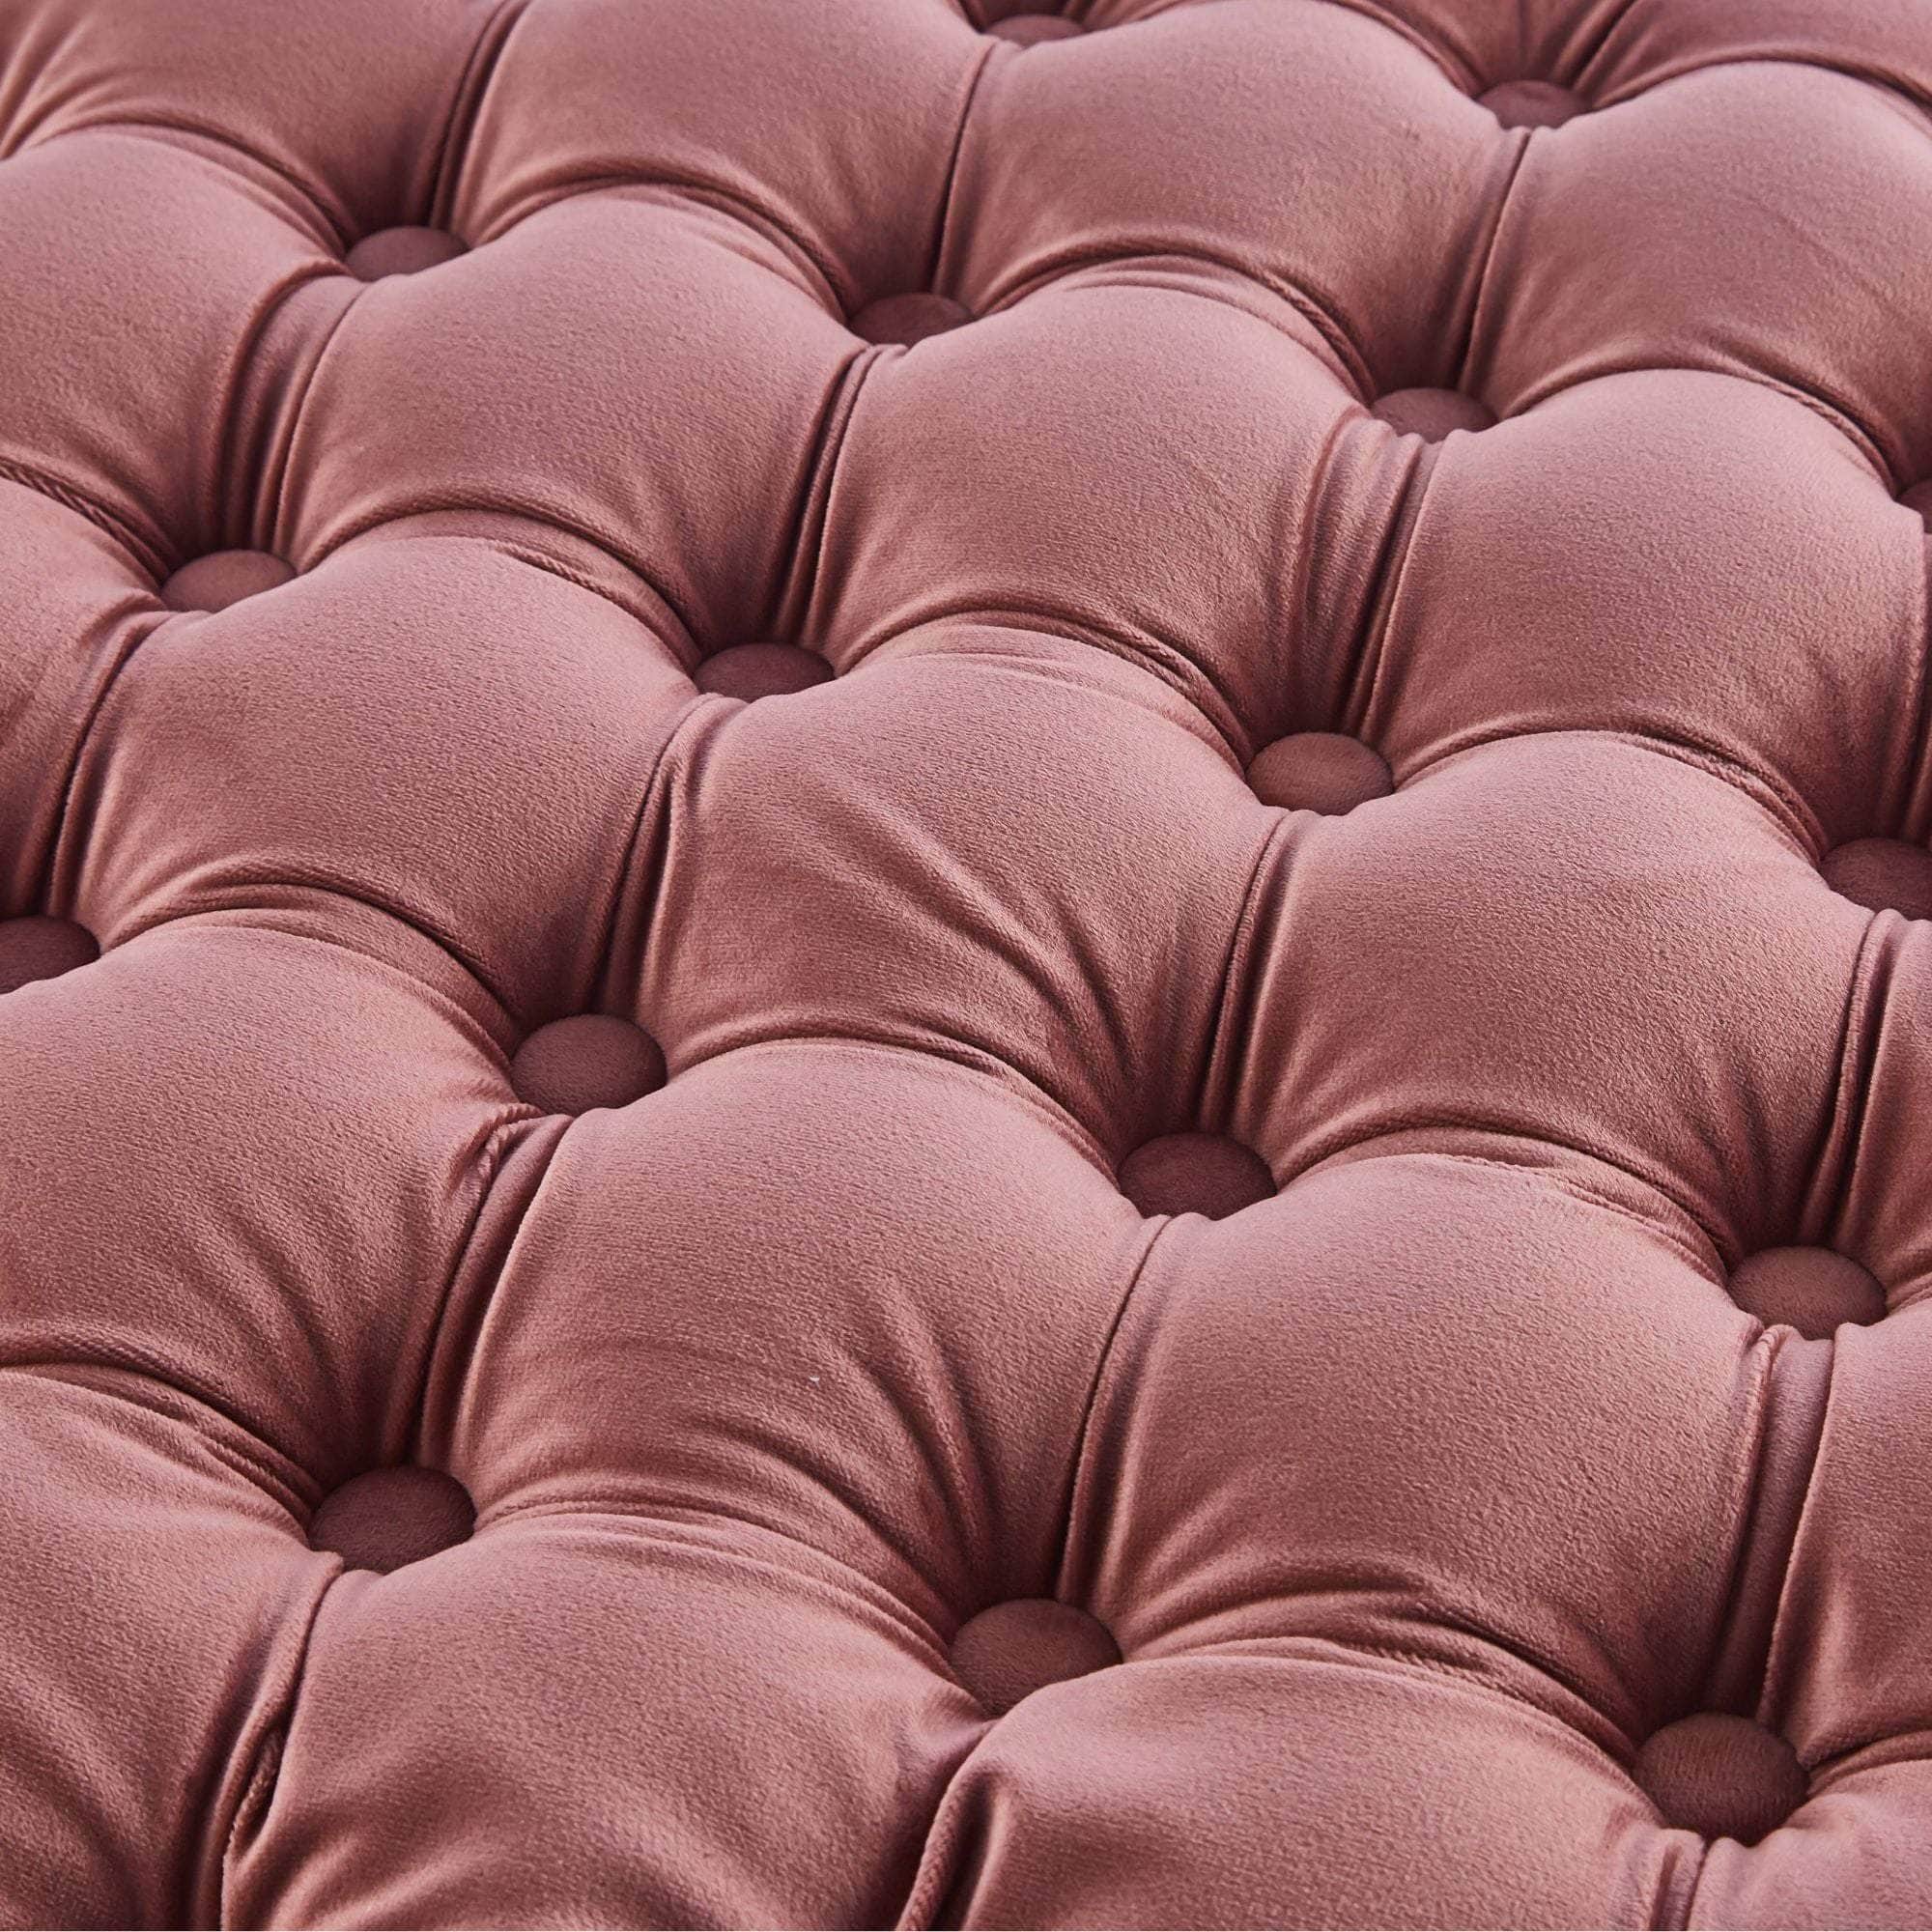 Tufted Velvet Fabric Round Ottoman Footstools - Rose Pink